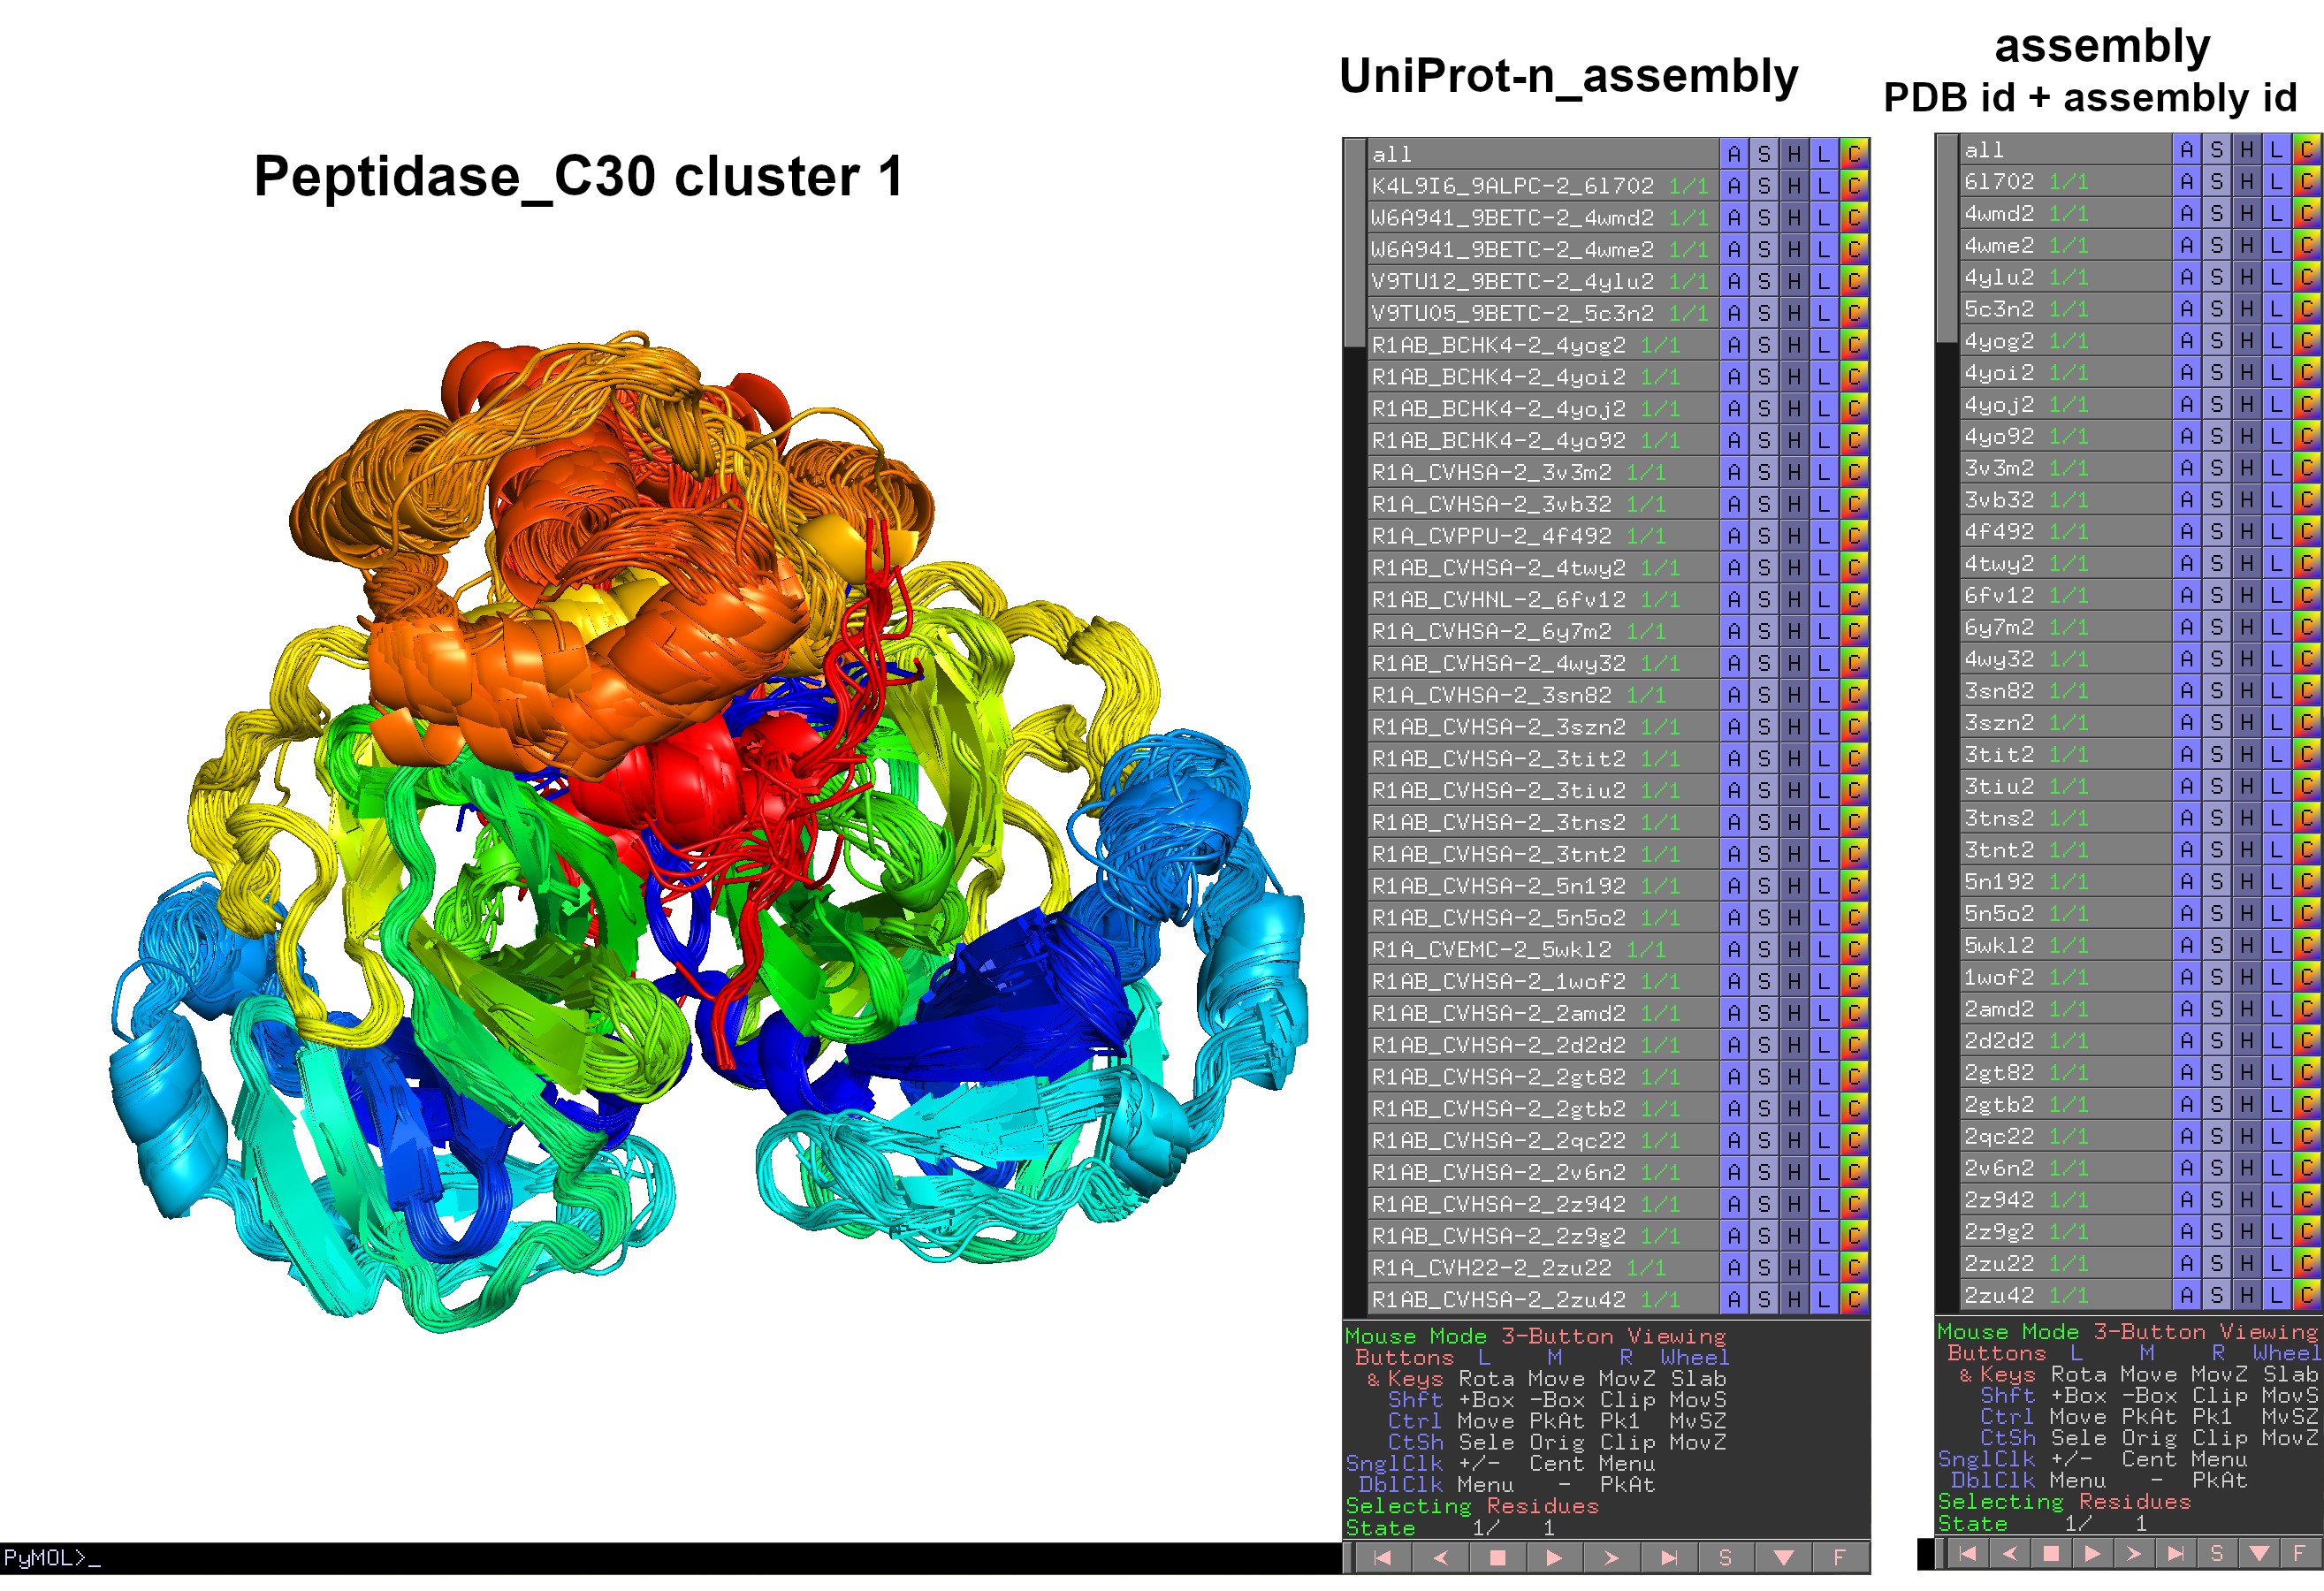 Peptidase_C30 clusters